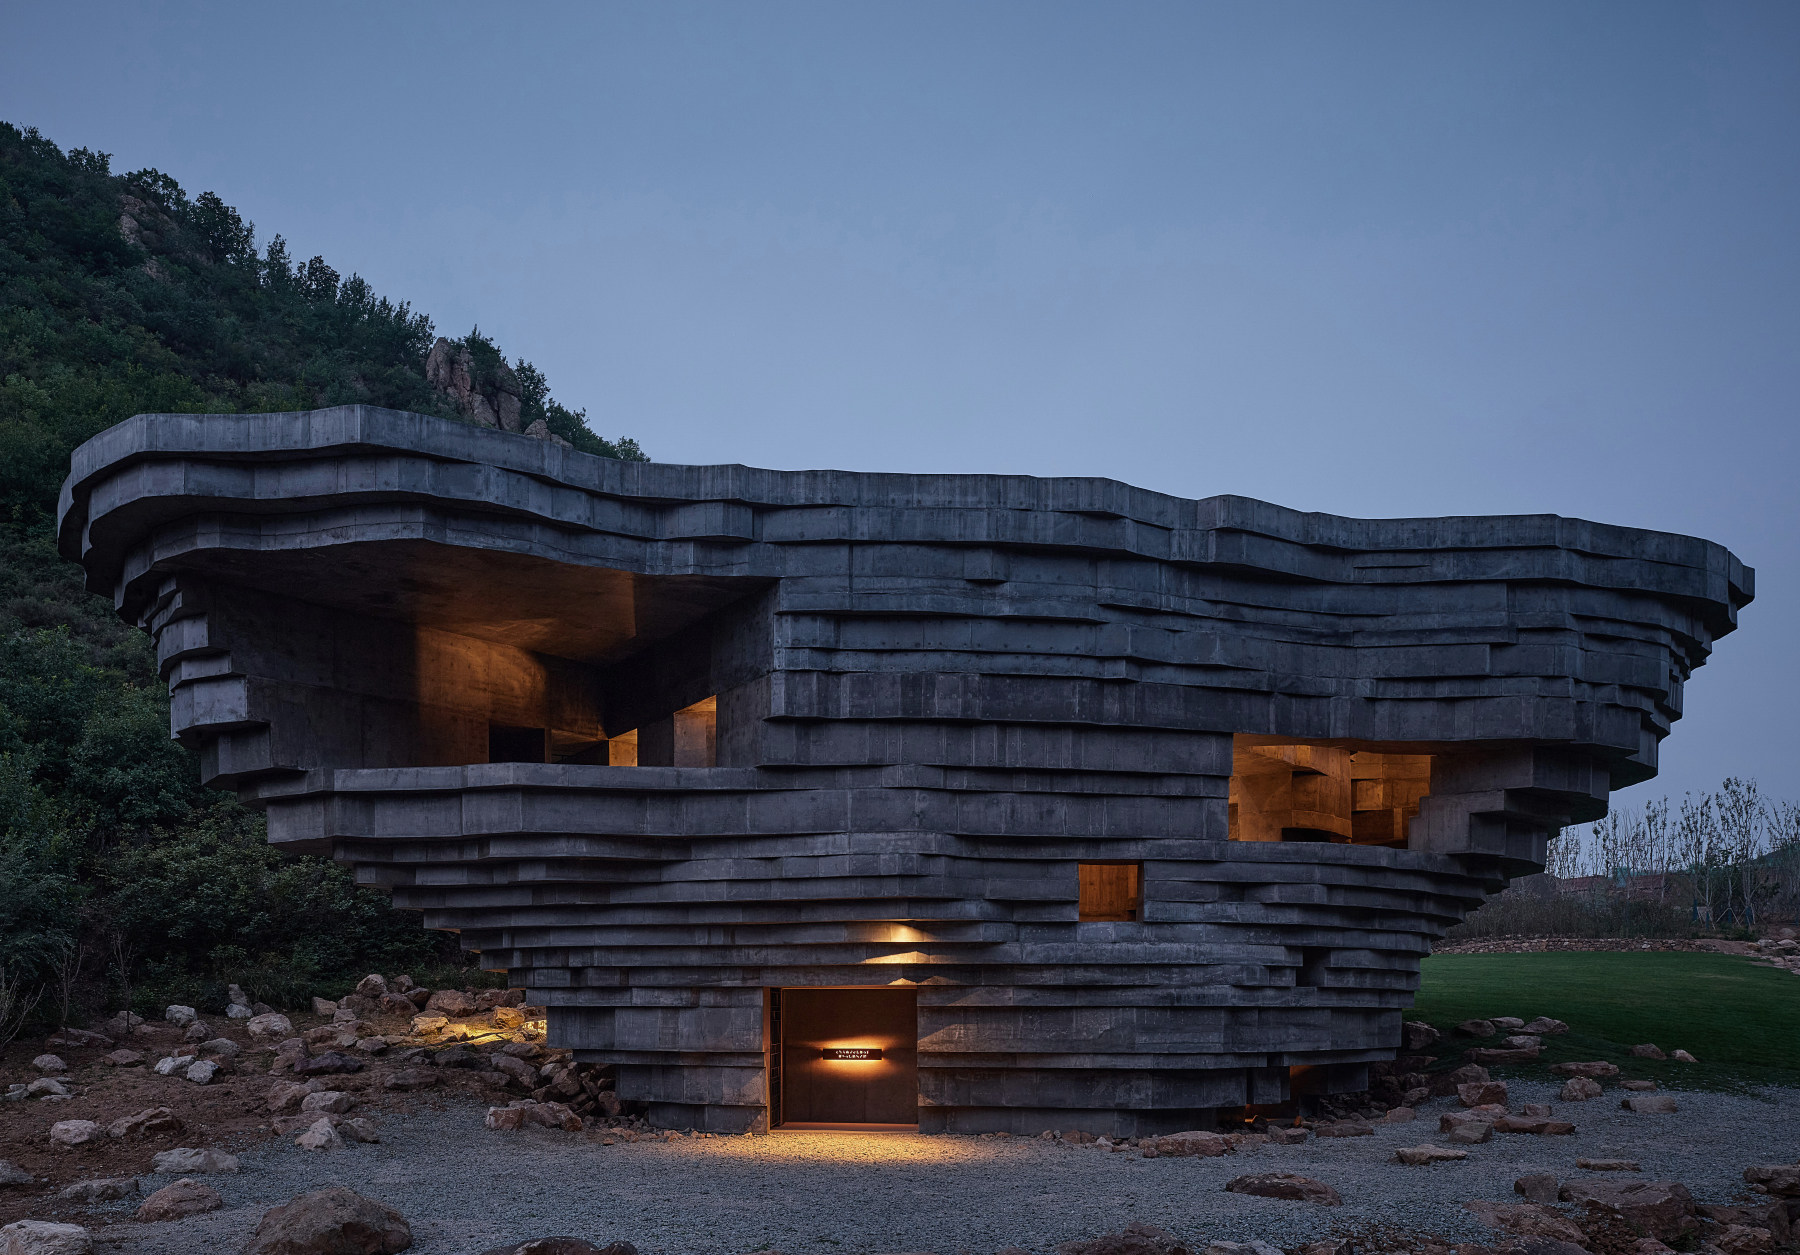 China’s Chapel of Sound rock venue was designed by OPEN Architects to match its wild surroundings. Photo: Jonathan Leijonhufvud/Instagram @jonathan.leijonhufvud